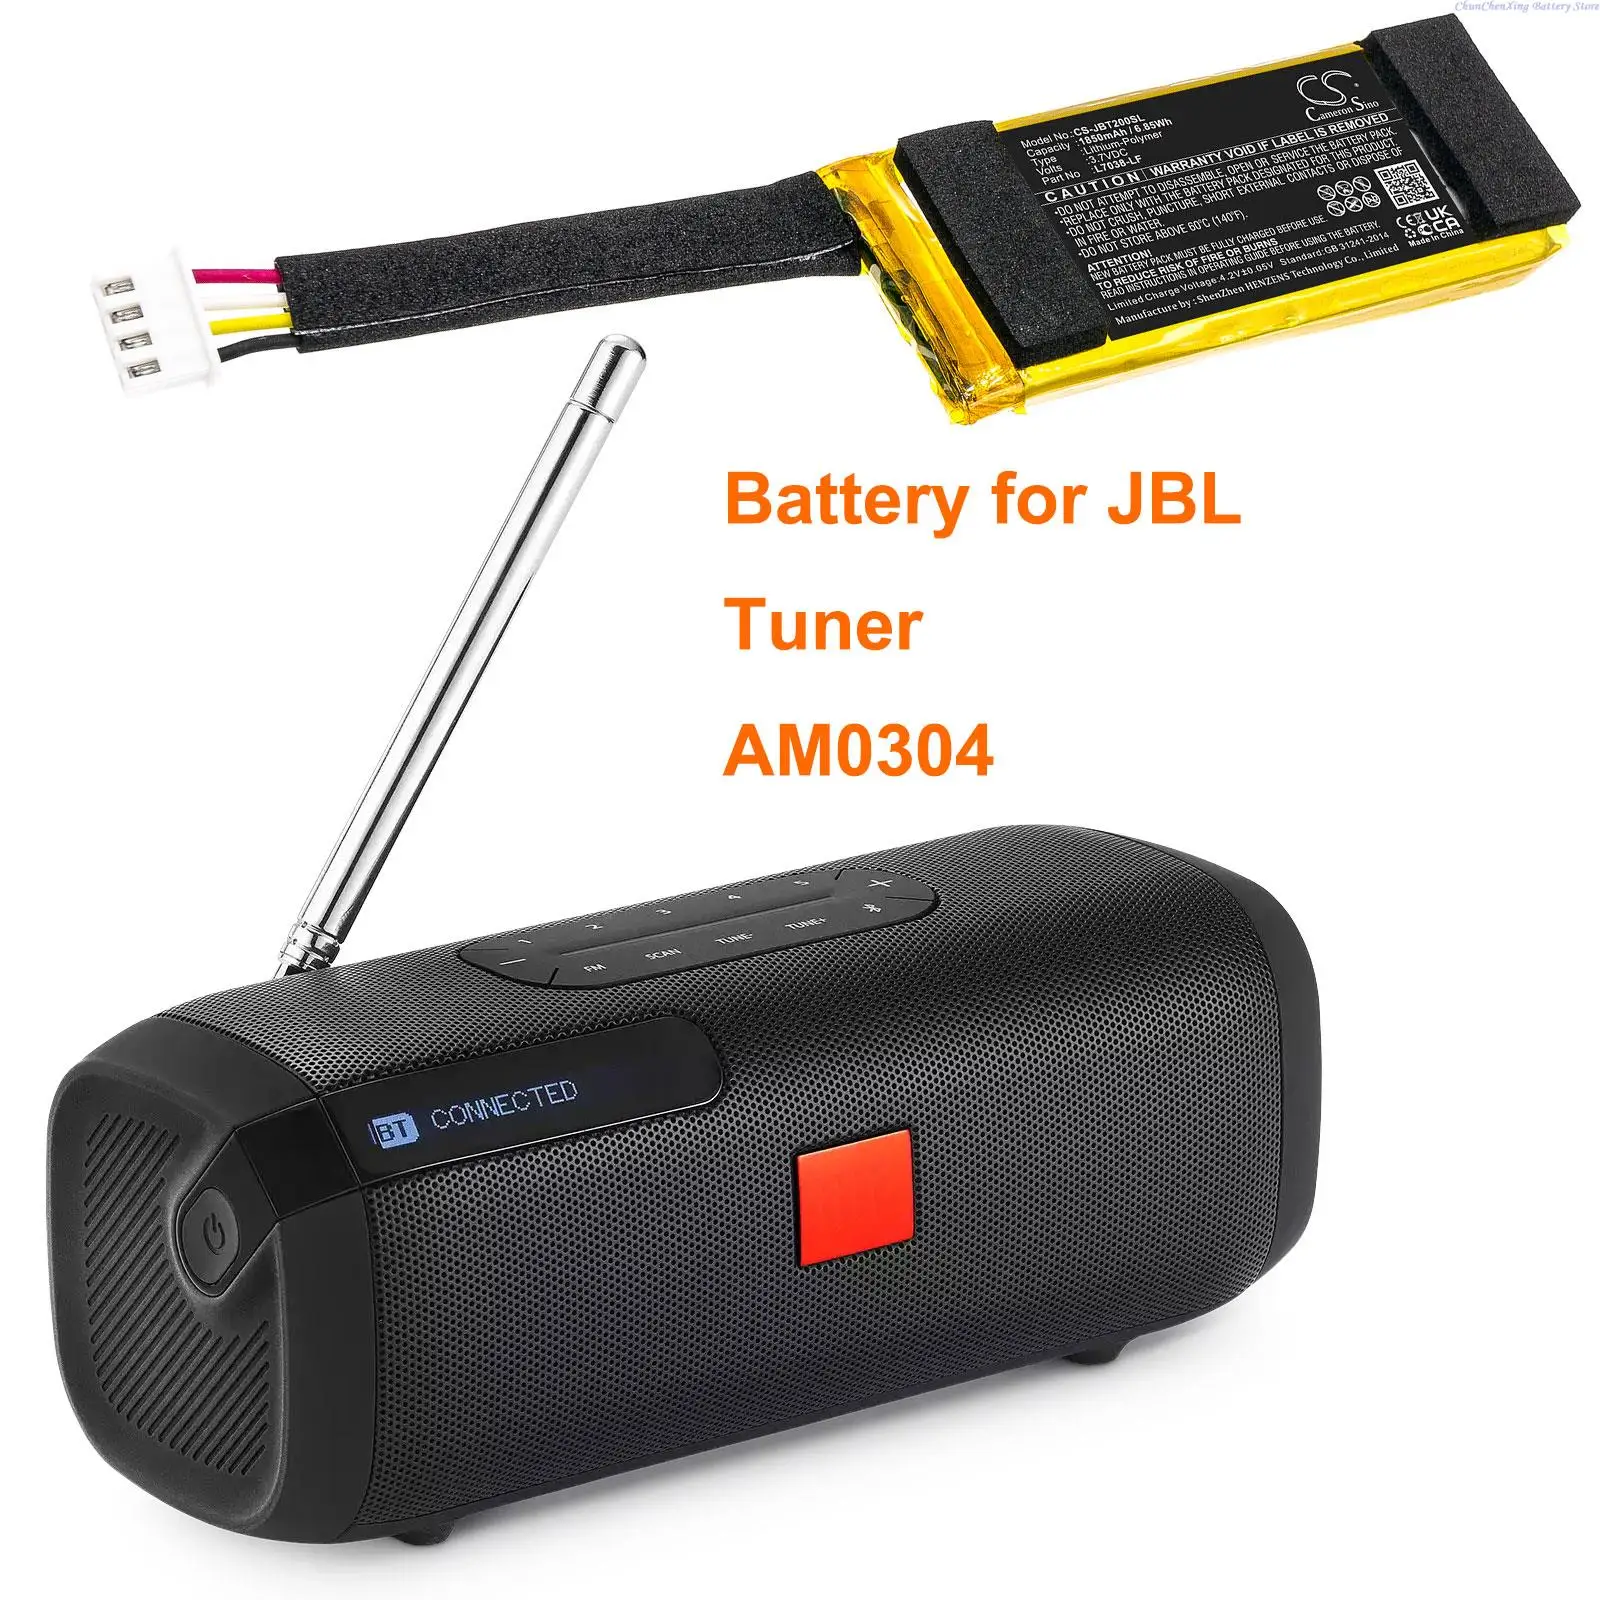 

Аккумулятор для динамика OrangeYu 1850 мАч для JBL тюнера, AM0304